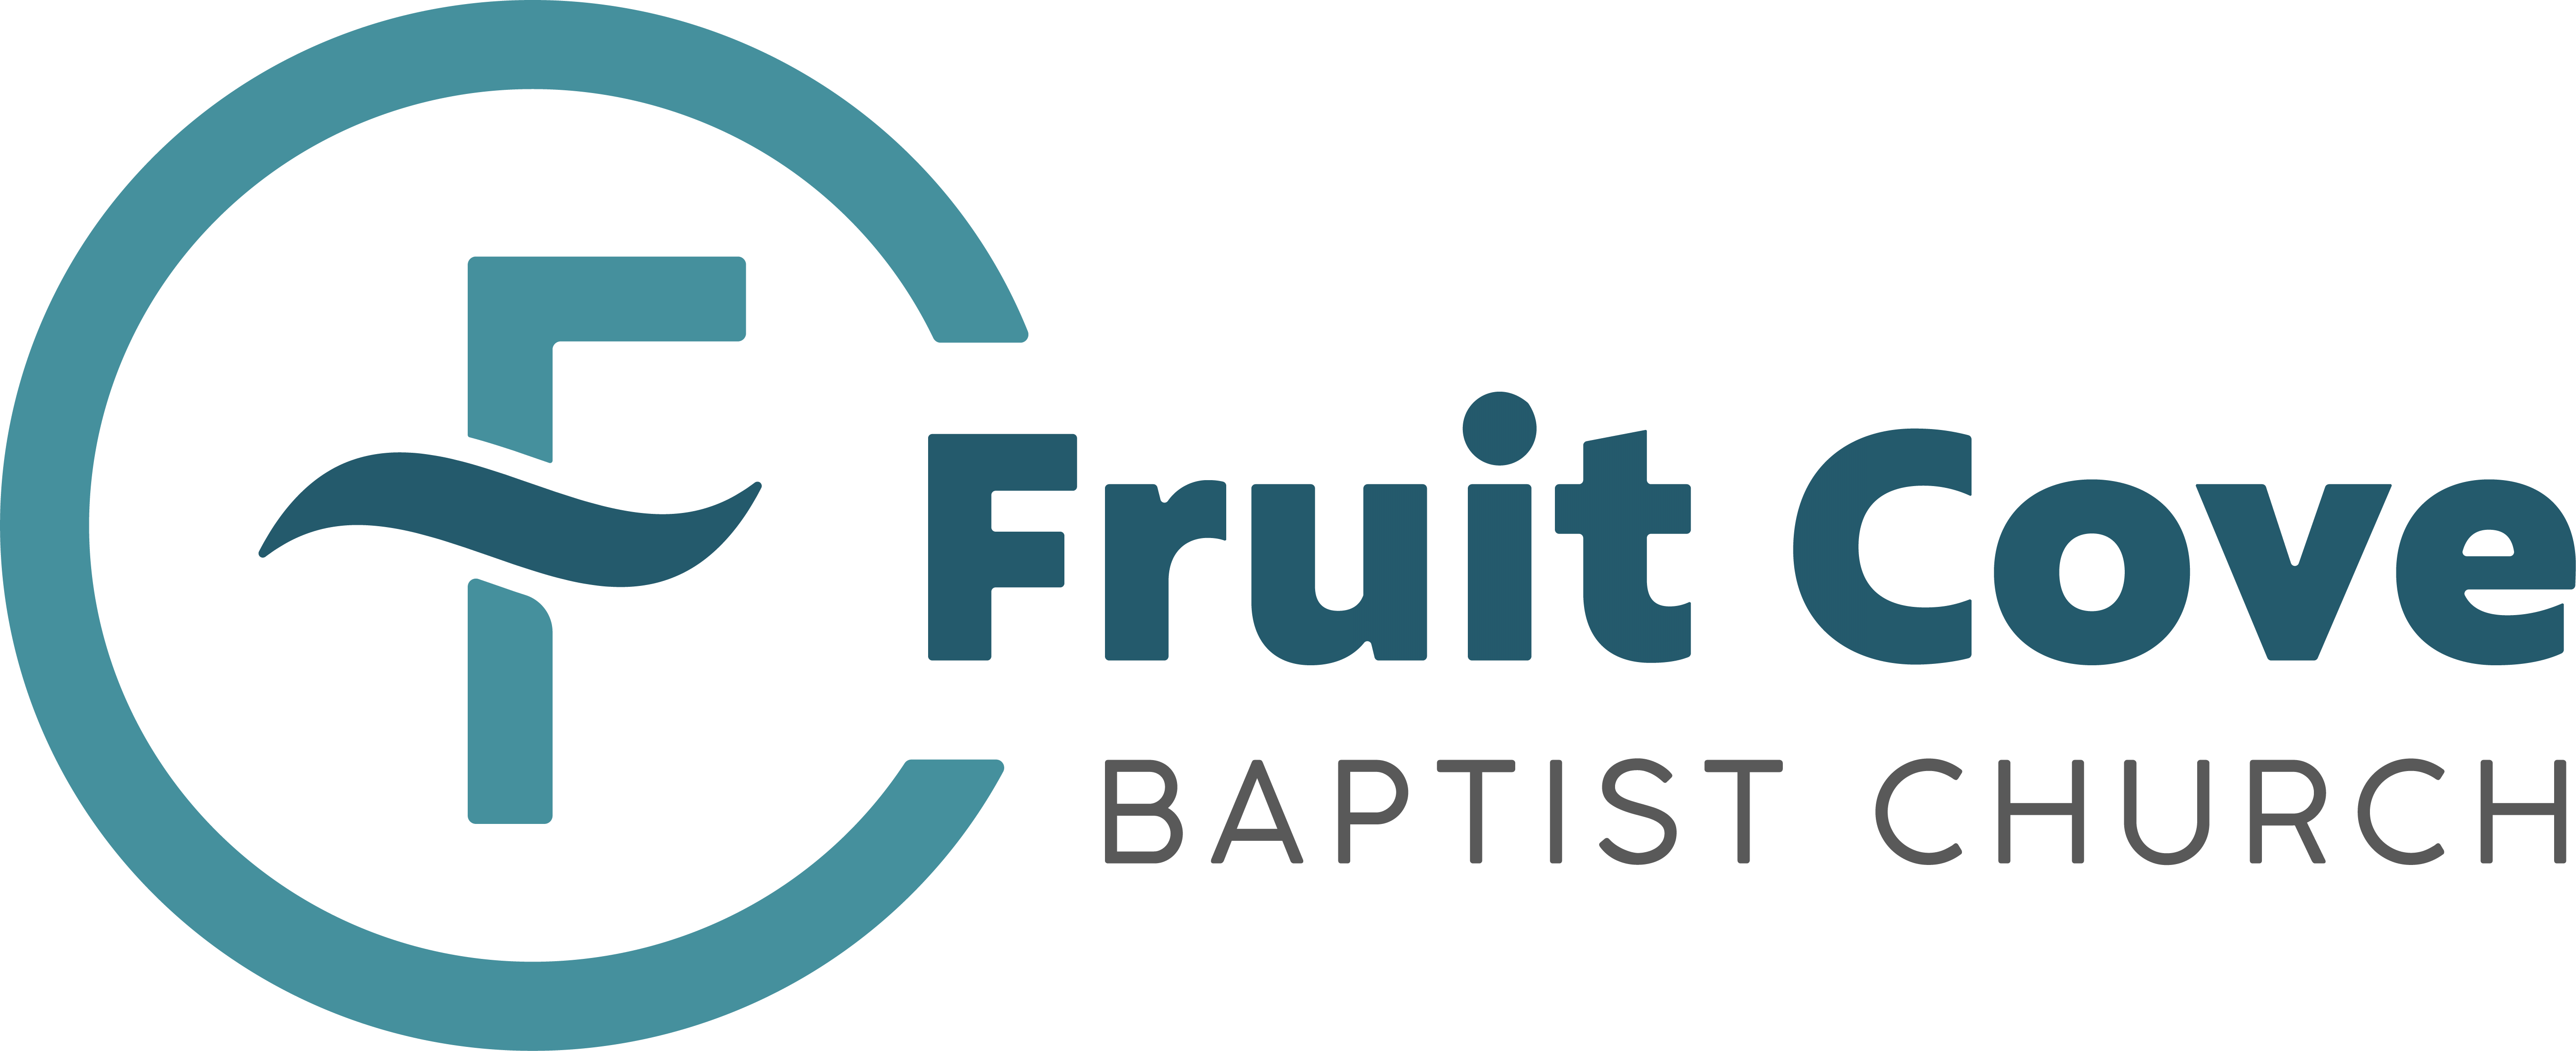 Fruit Cove Baptist Church